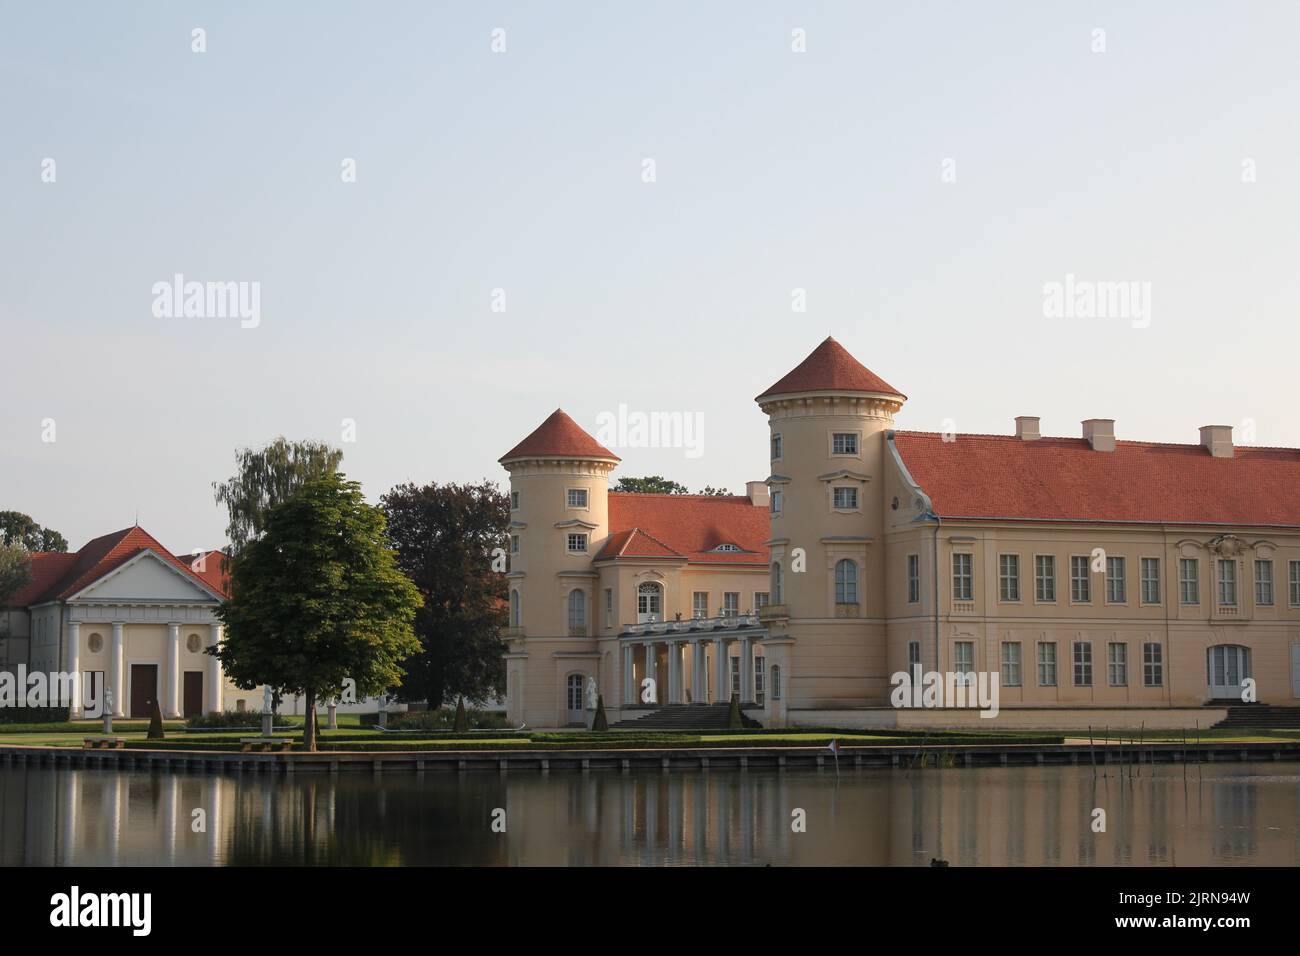 Schloss Rheinsberg mit Schlosstürmen Foto Stock